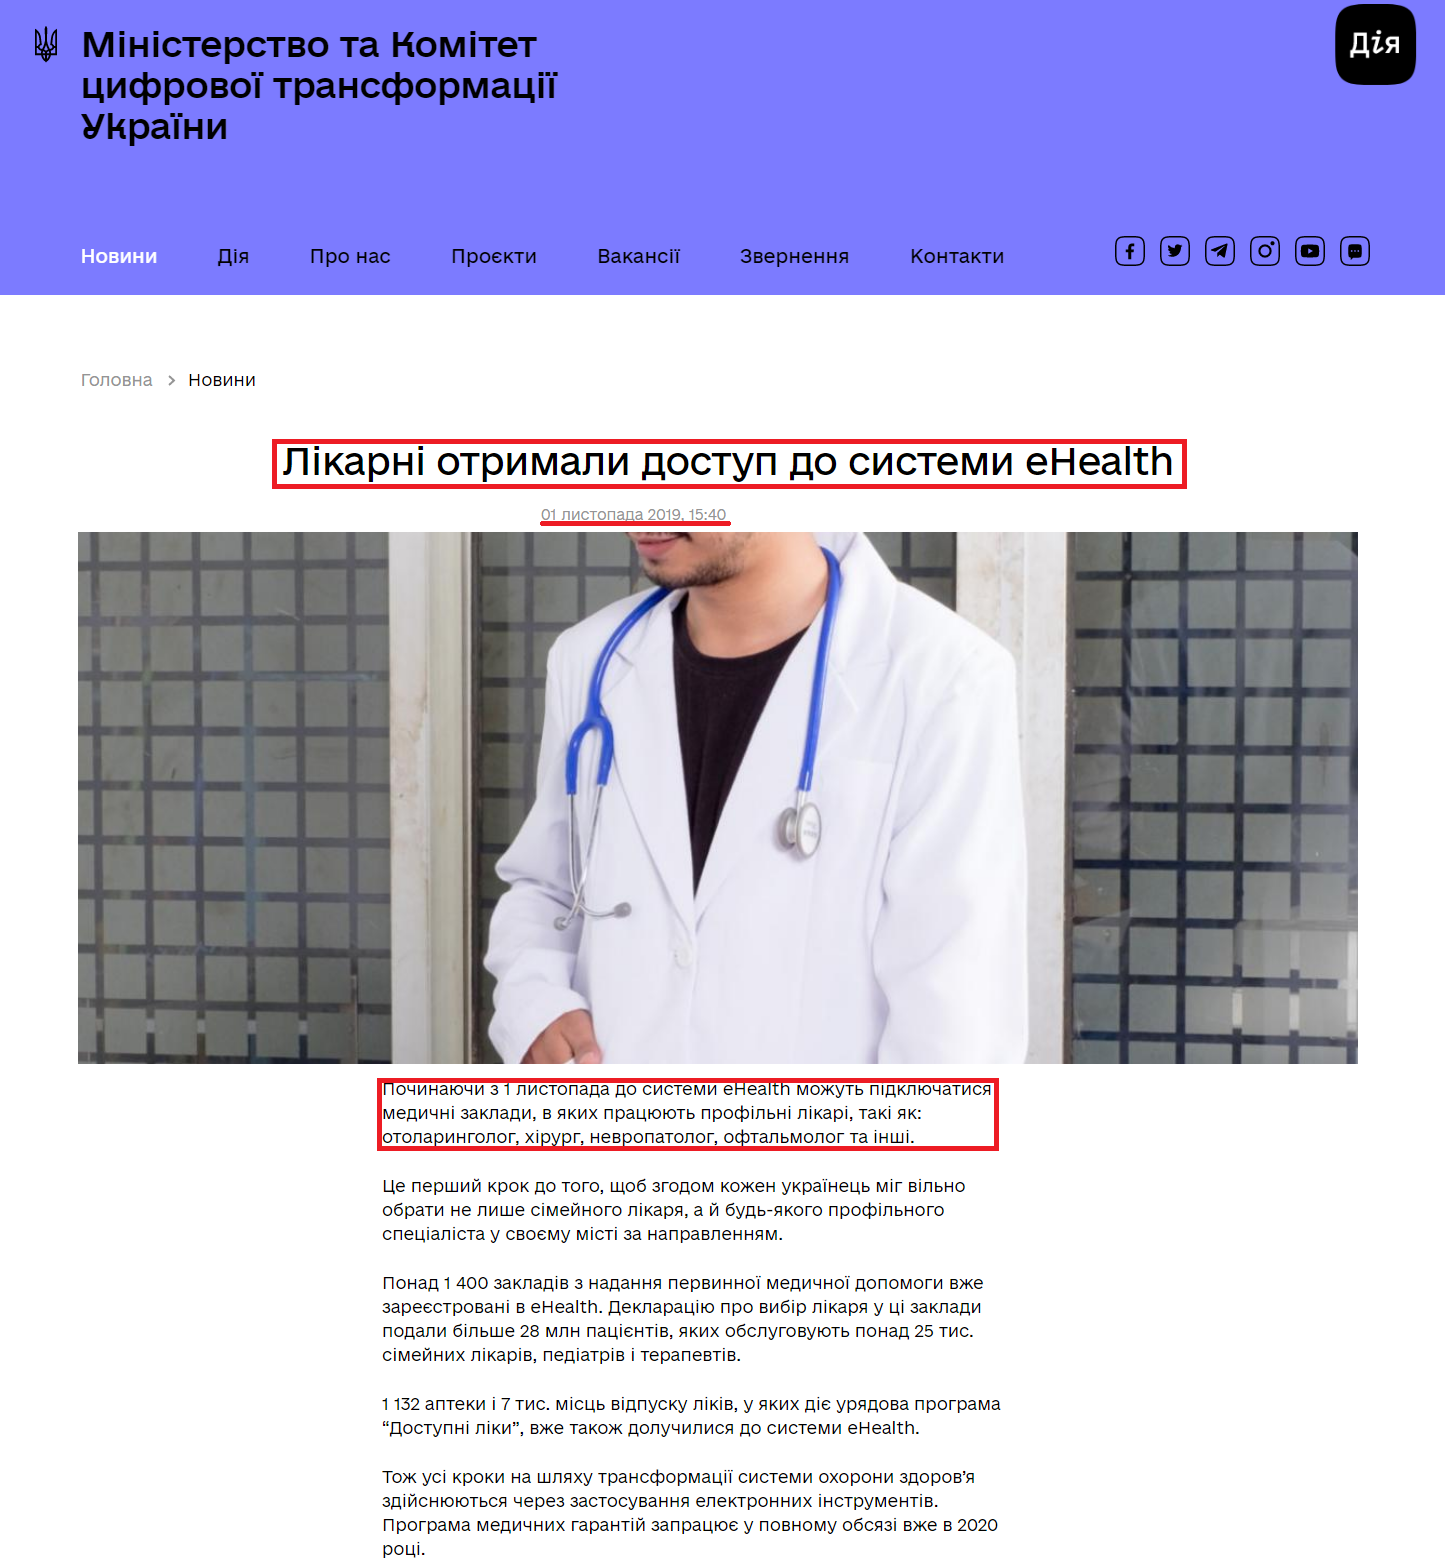 https://thedigital.gov.ua/news/likarni-otrimali-dostup-do-sistemi-ehealth